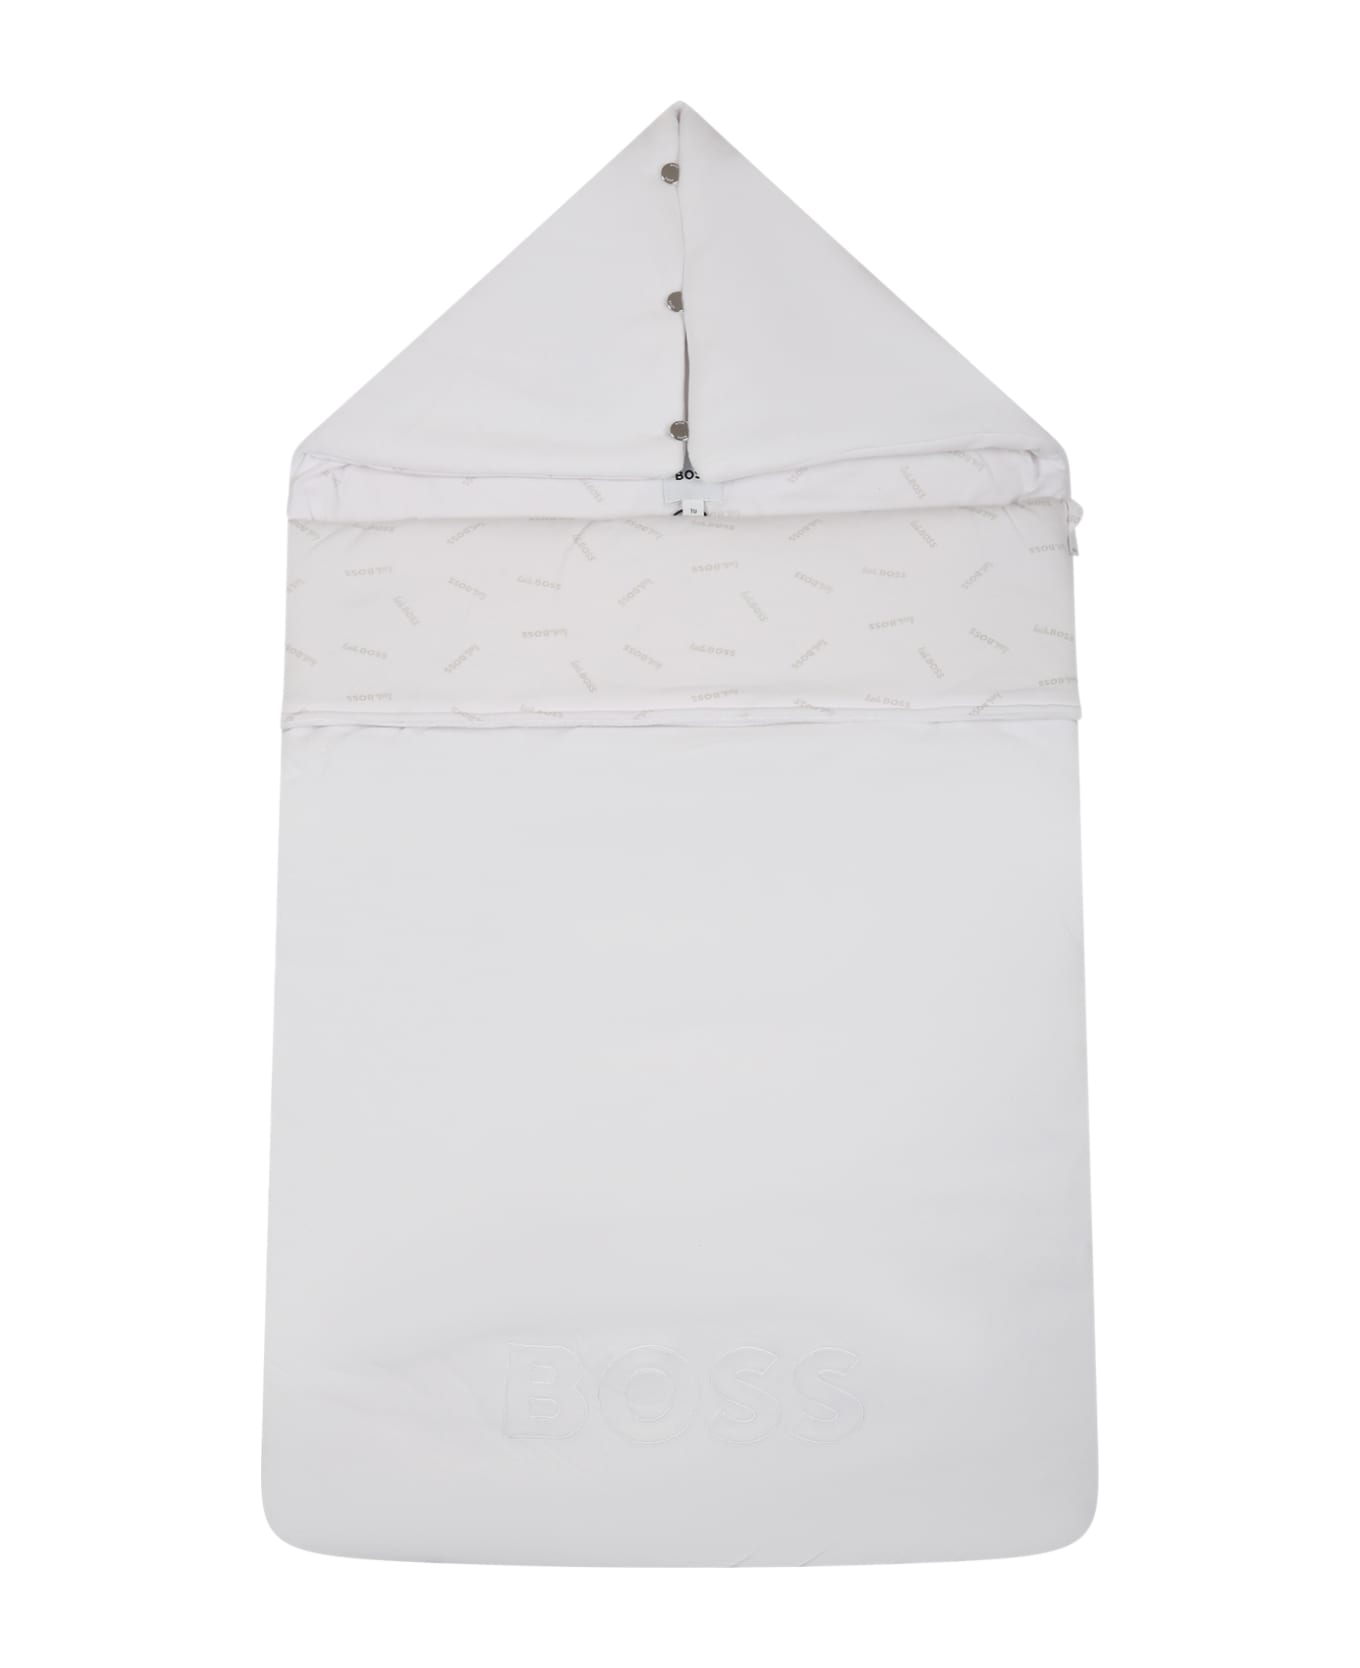 Hugo Boss White Sleeping Bag For Baby Boy With Logo - White アクセサリー＆ギフト